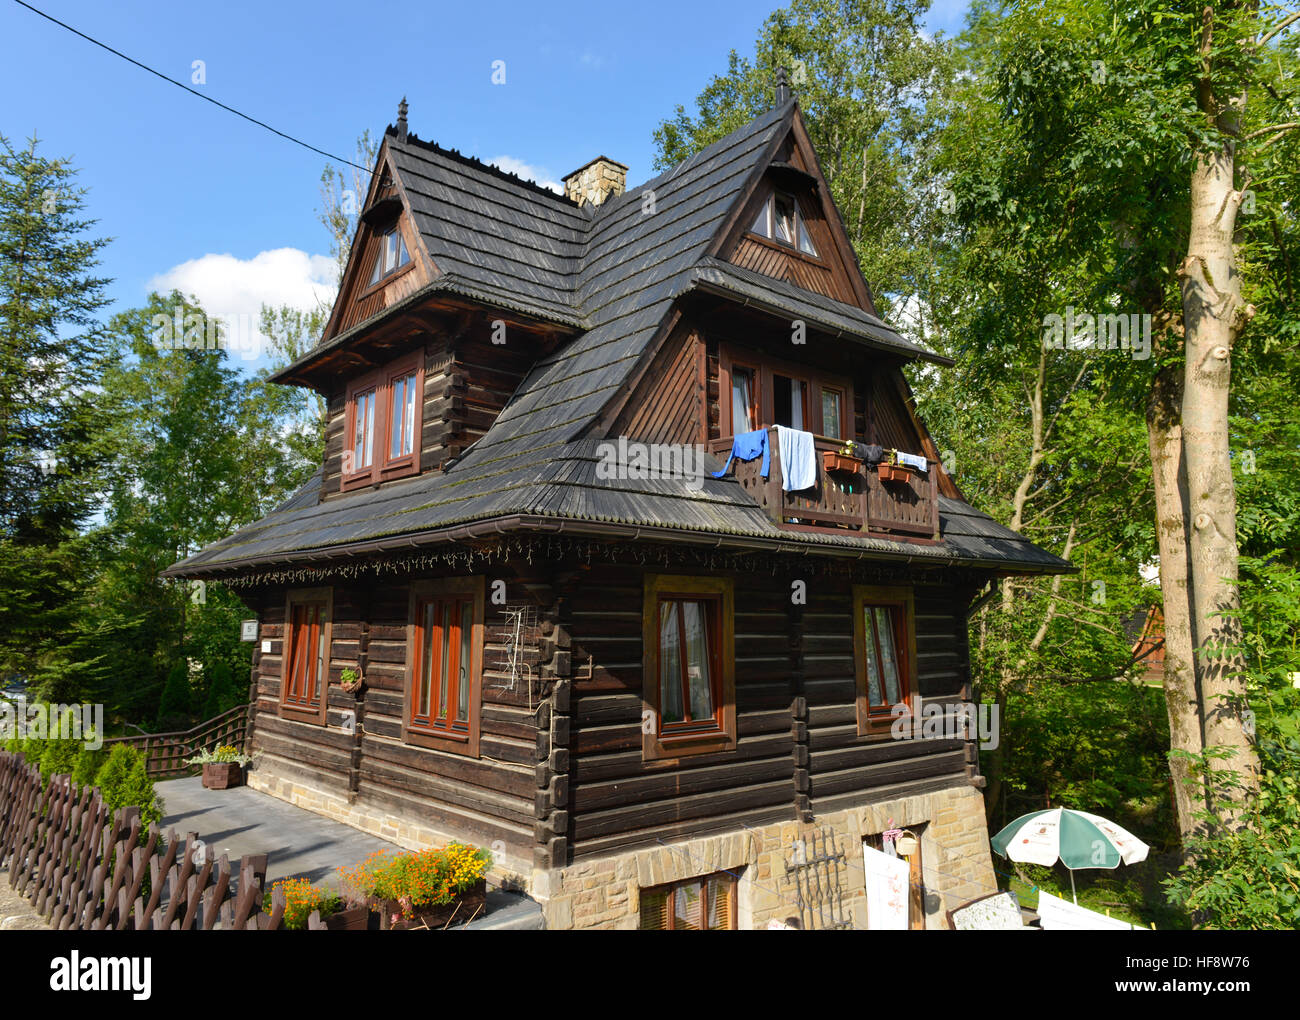 De Trading, Strazyska, Zakopane, Pologne, maison de bois traditionnelle, Pologne Banque D'Images